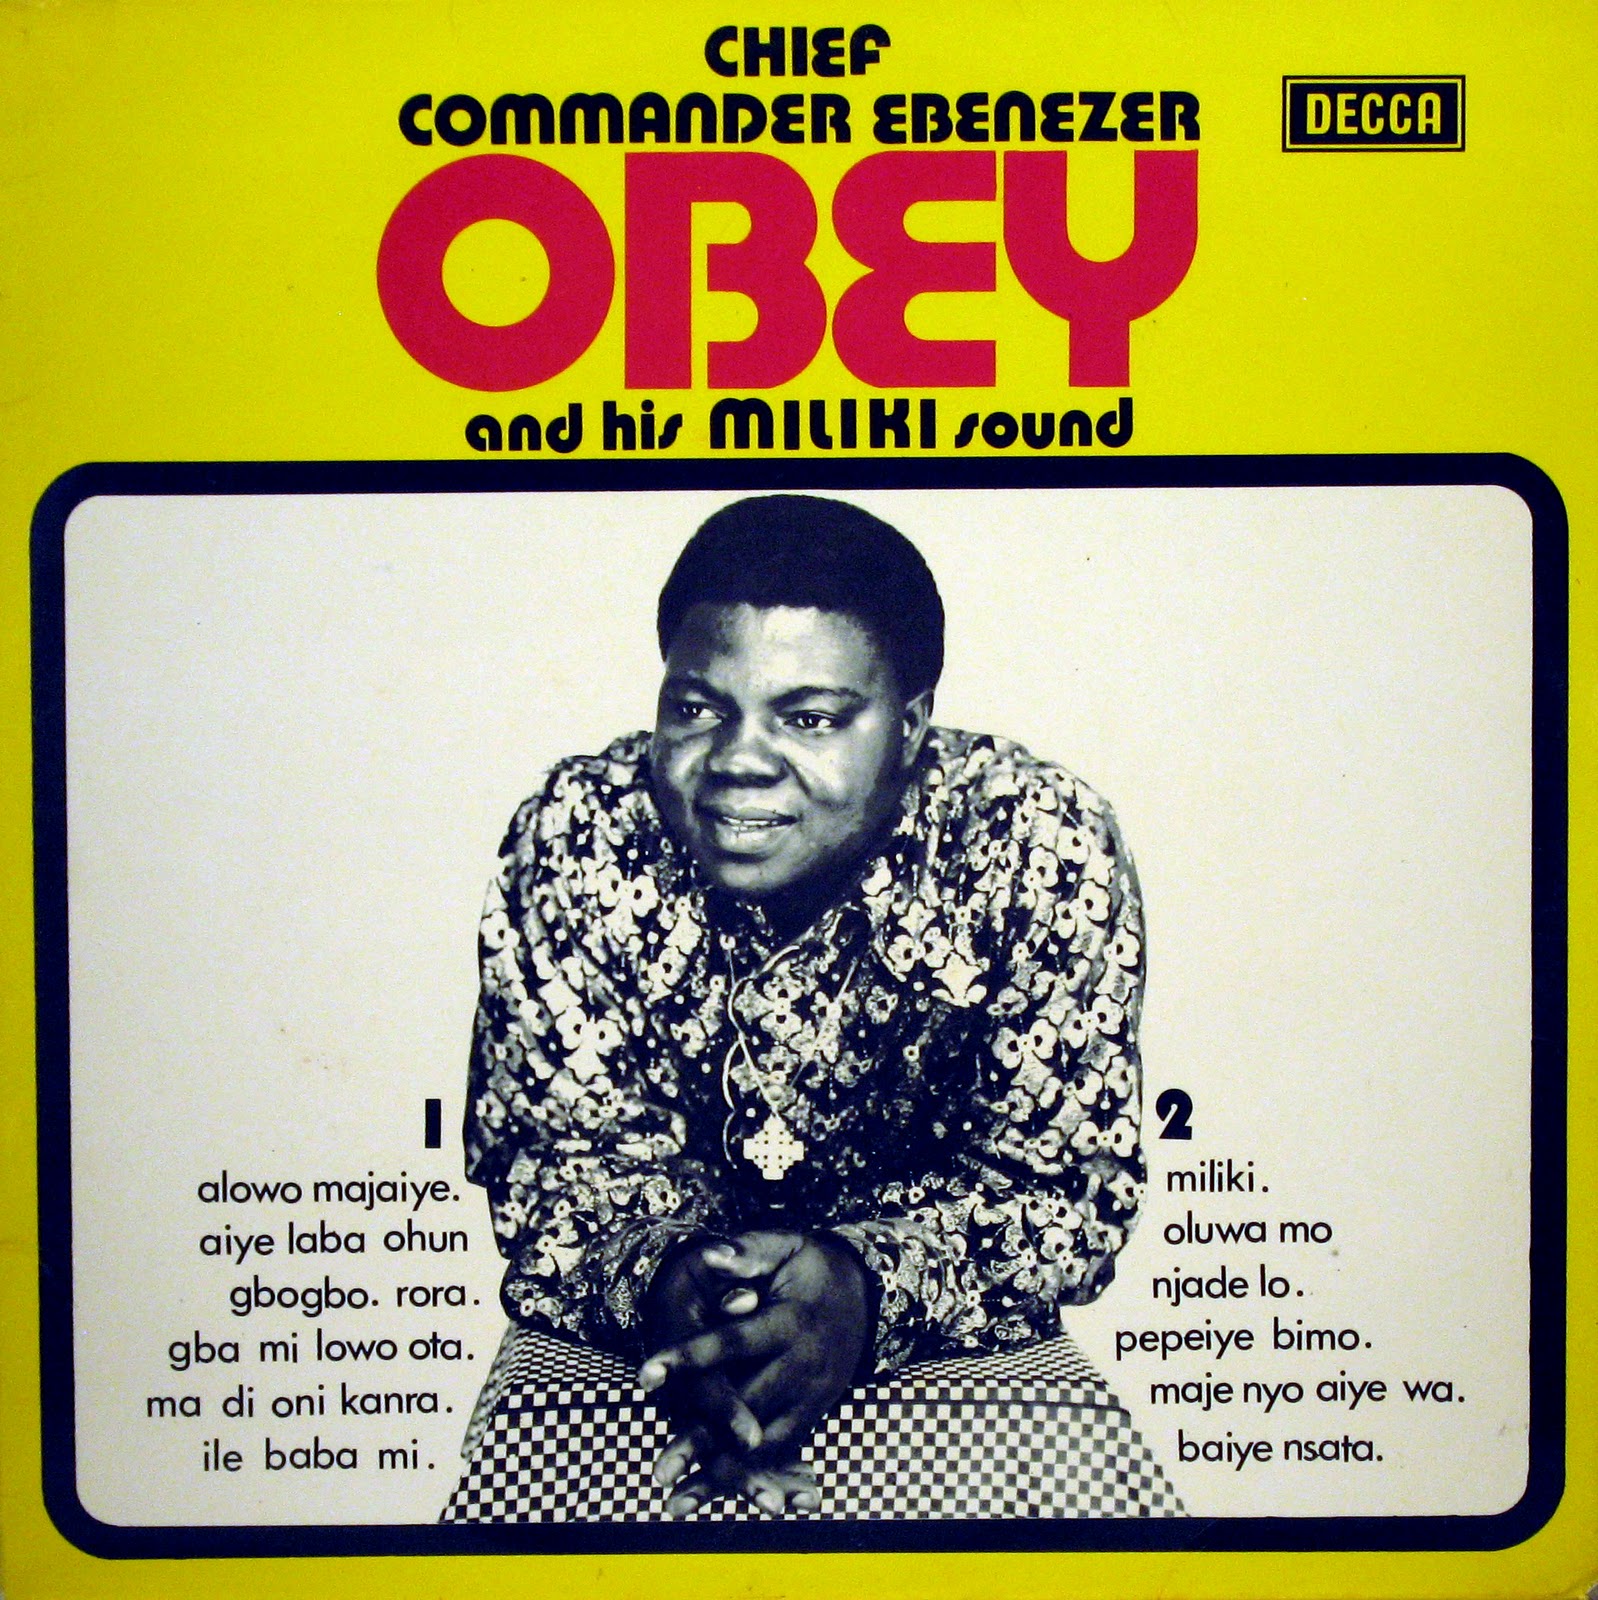 Ebenezer Obey, front